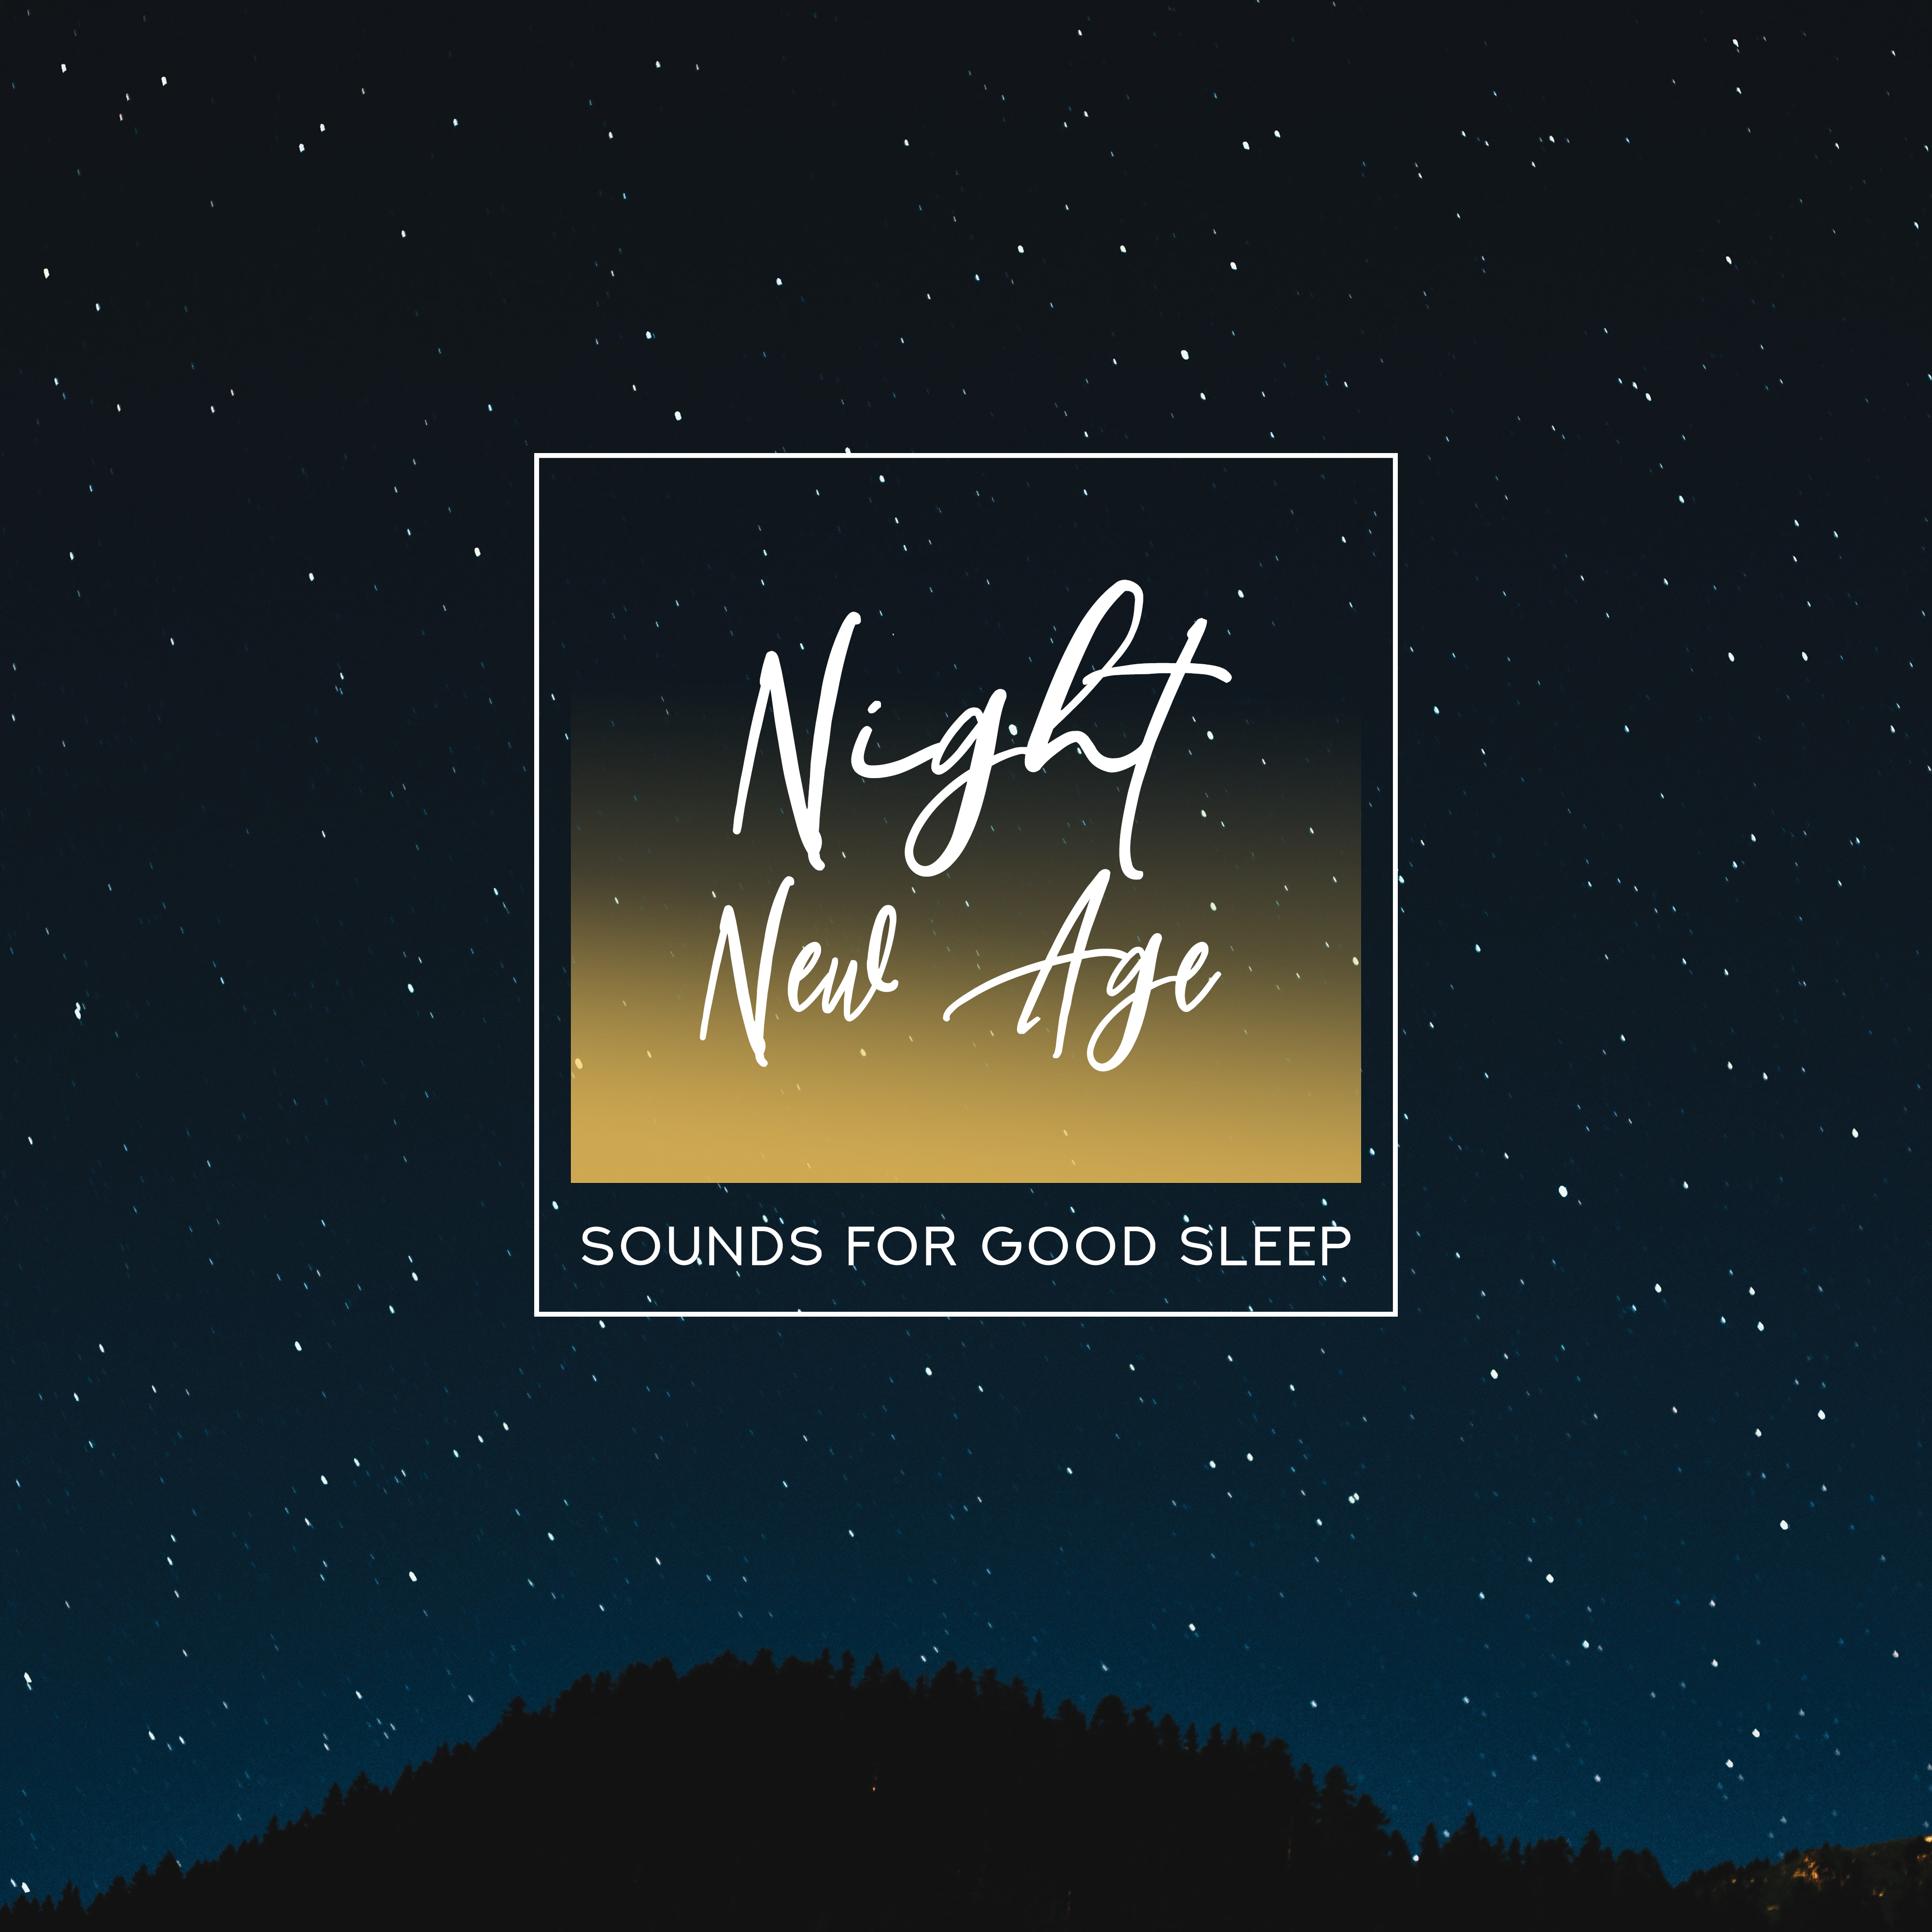 Night New Age Sounds for Good Sleep